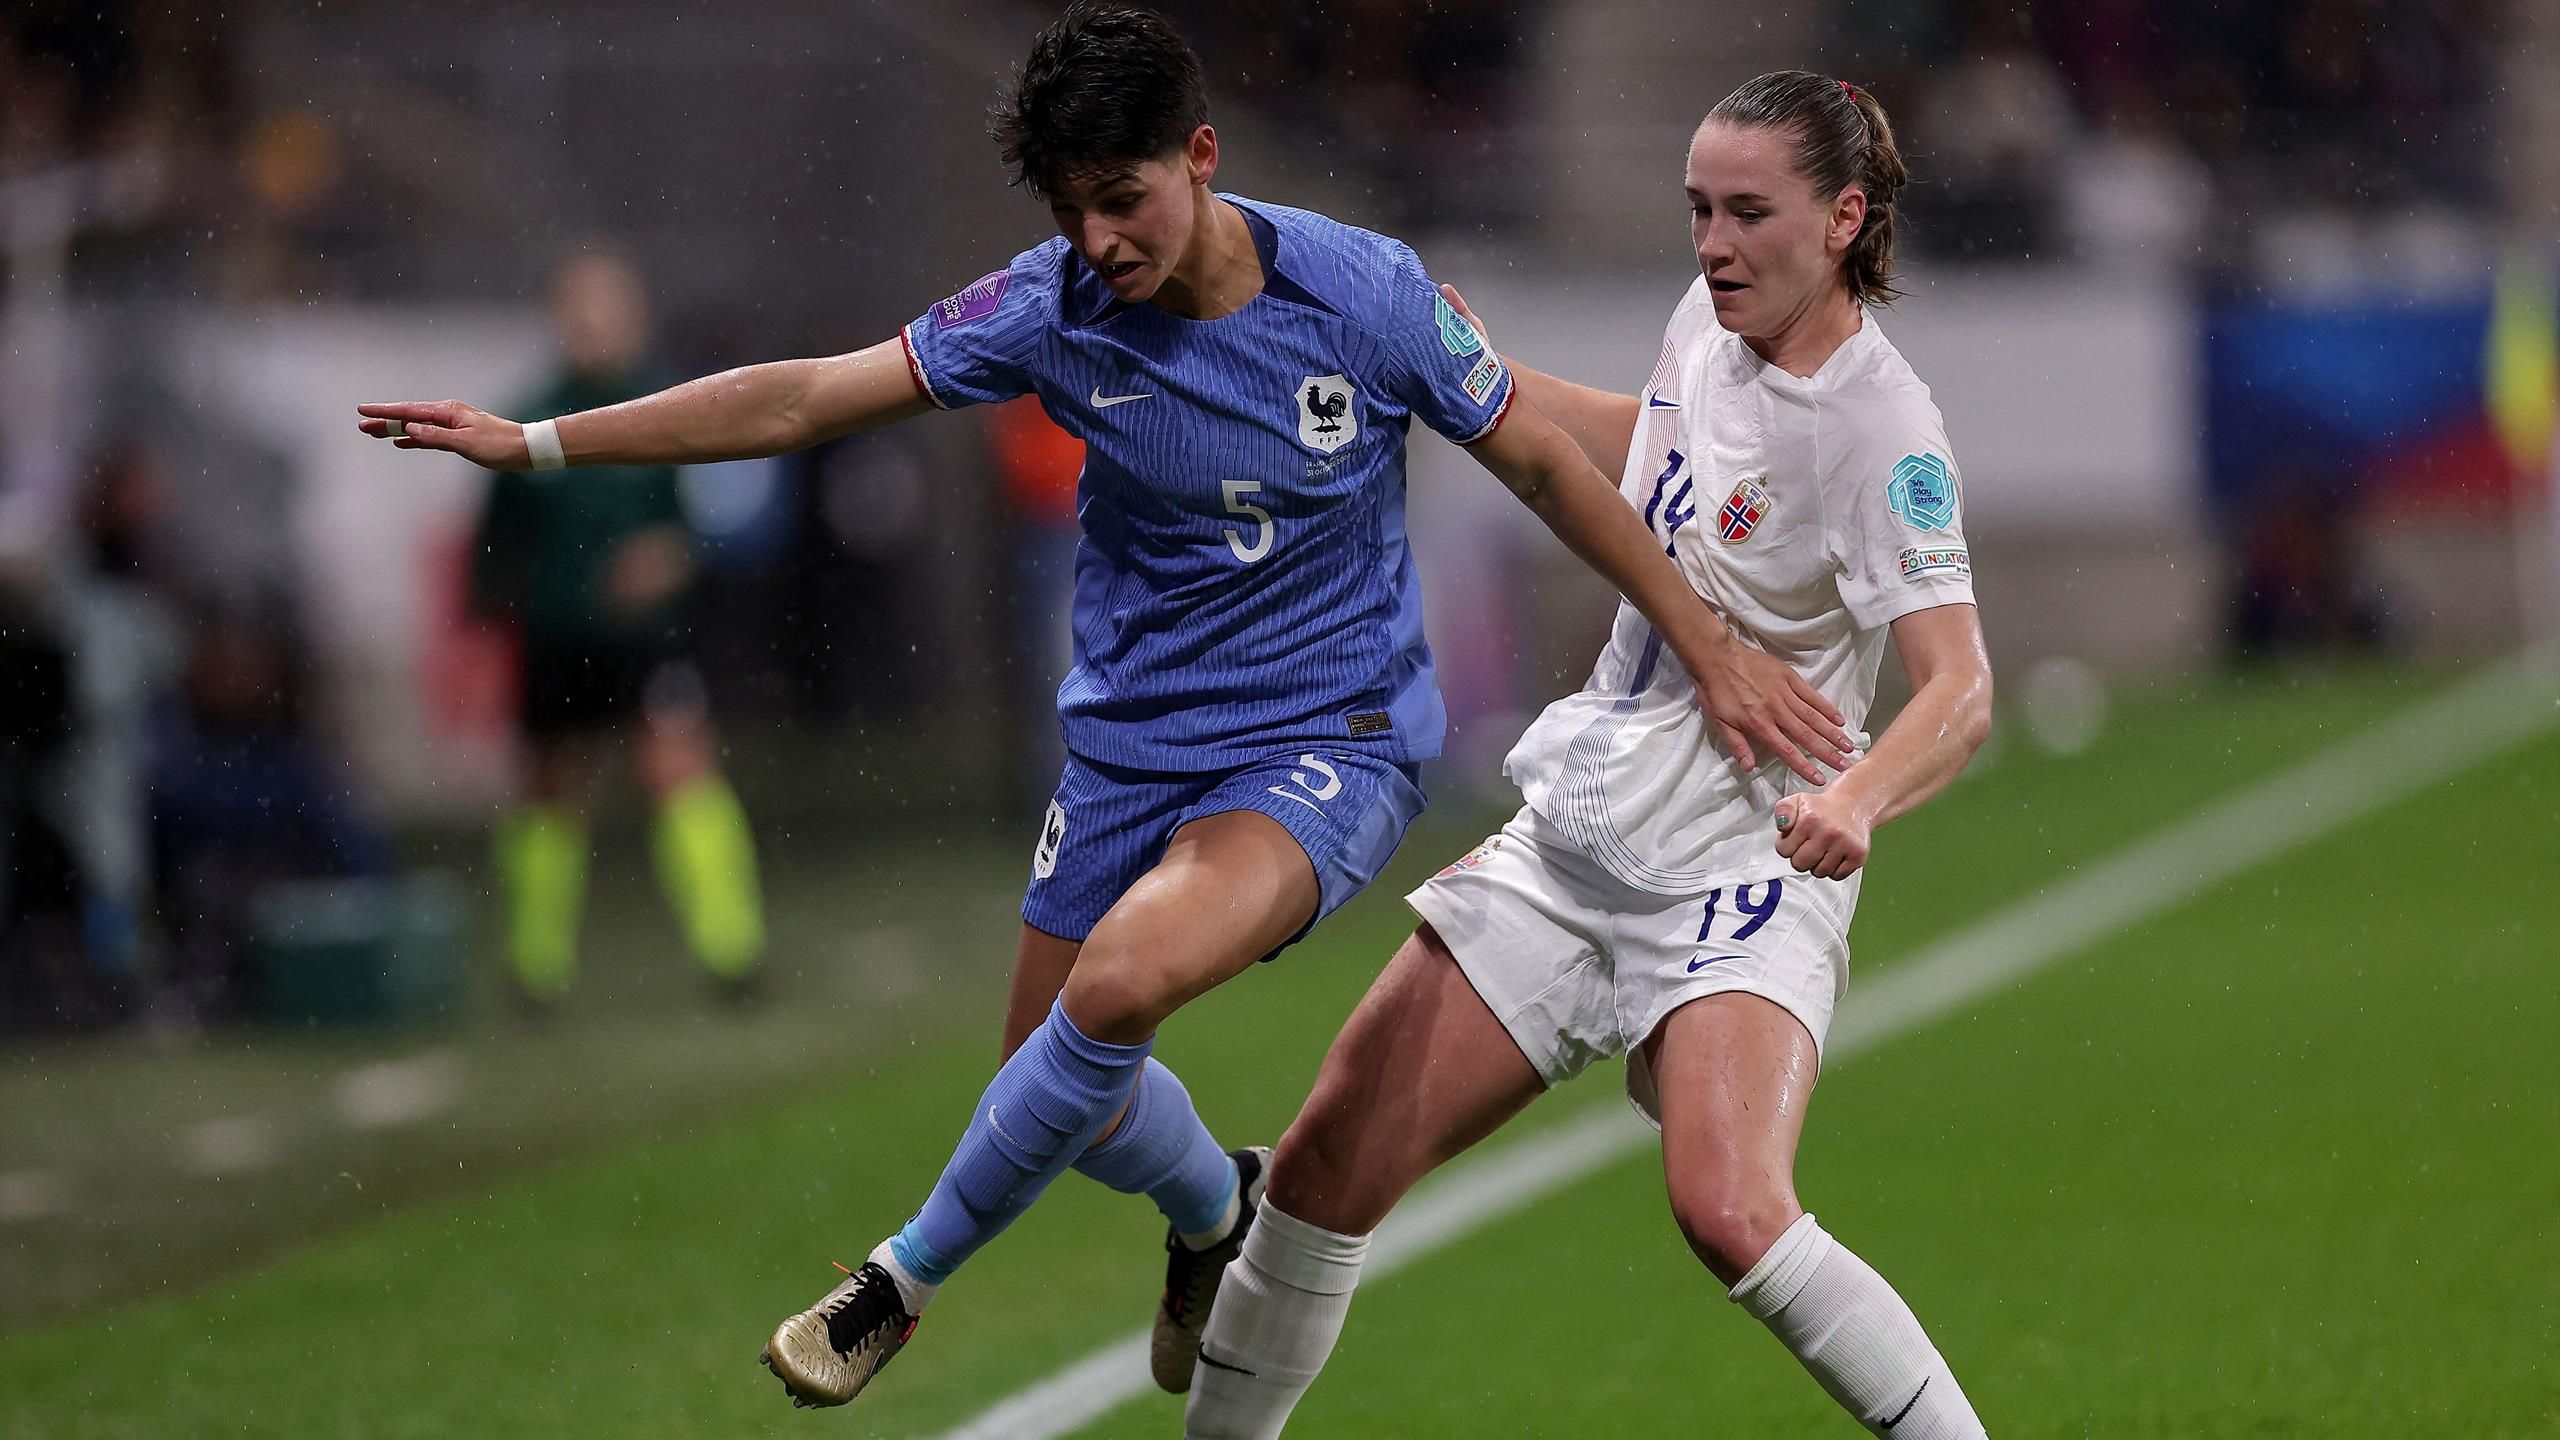 UEFA Women’s Nations League: pareggio senza reti tra Francia e Norvegia (0-0), ma la Final Four si avvicina